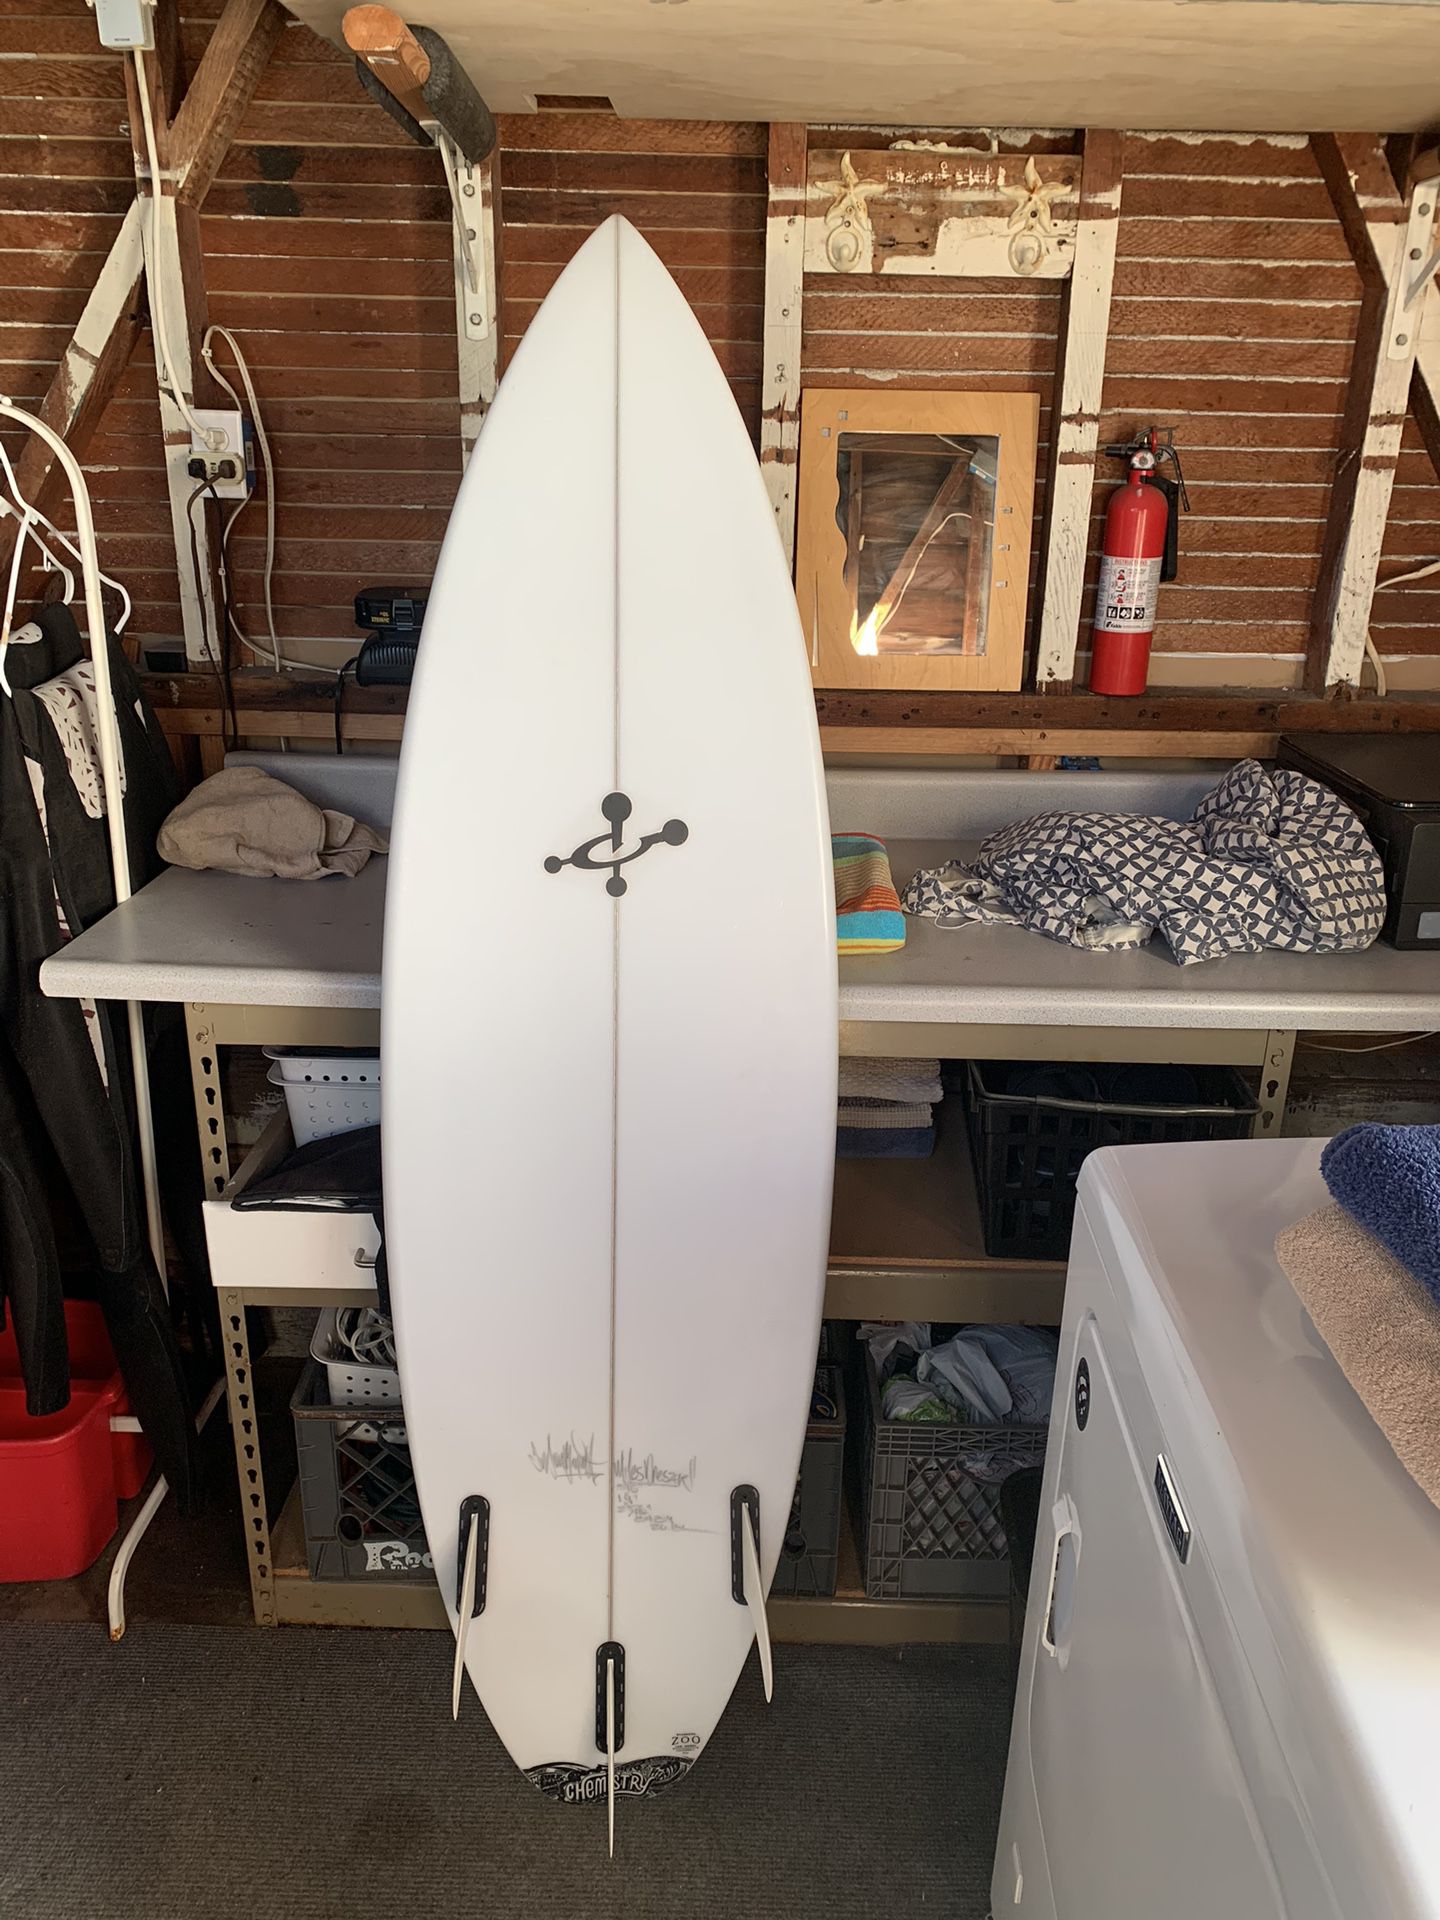 5'10” Chemistry Surfboard for Sale in Oceanside, CA OfferUp